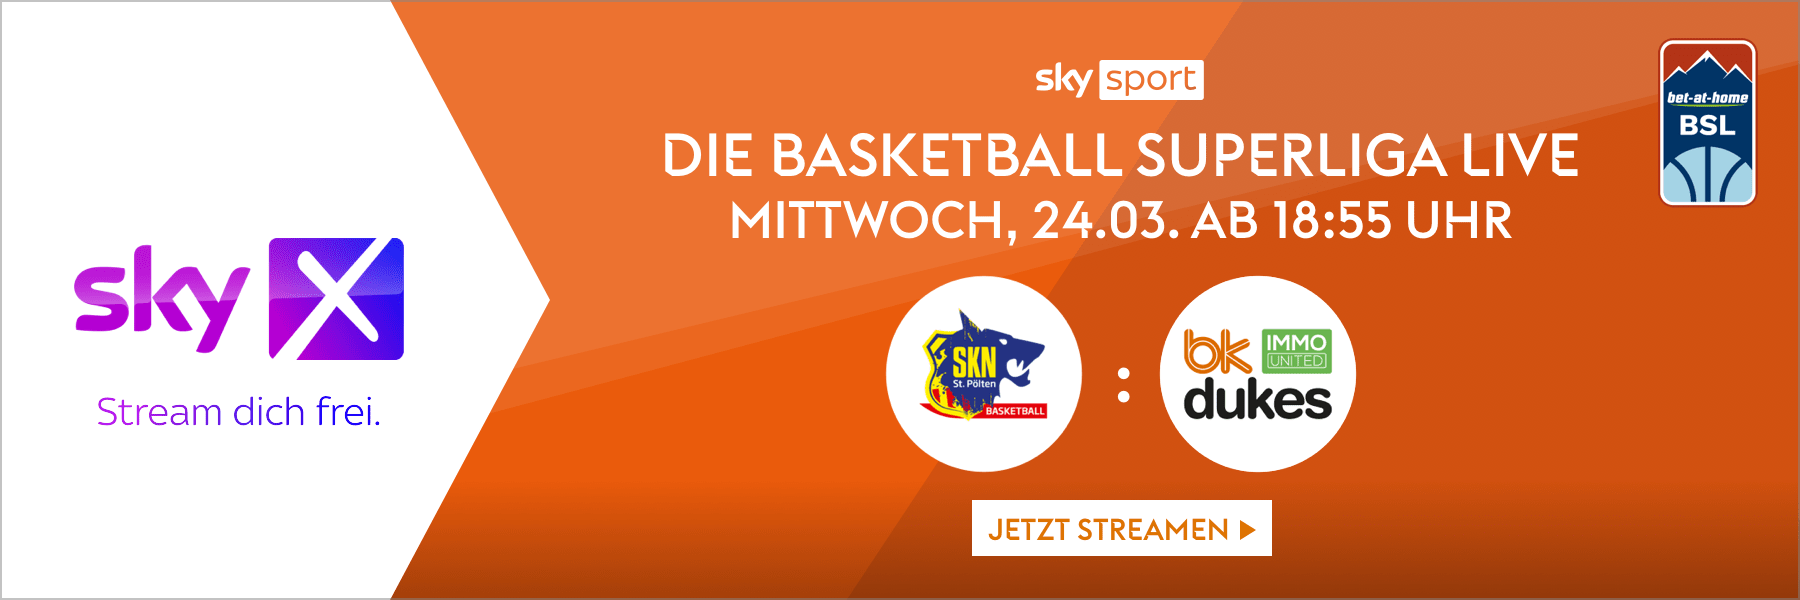 Die bet-at-home Basketball Superliga live bei Sky Das Duell SKN St